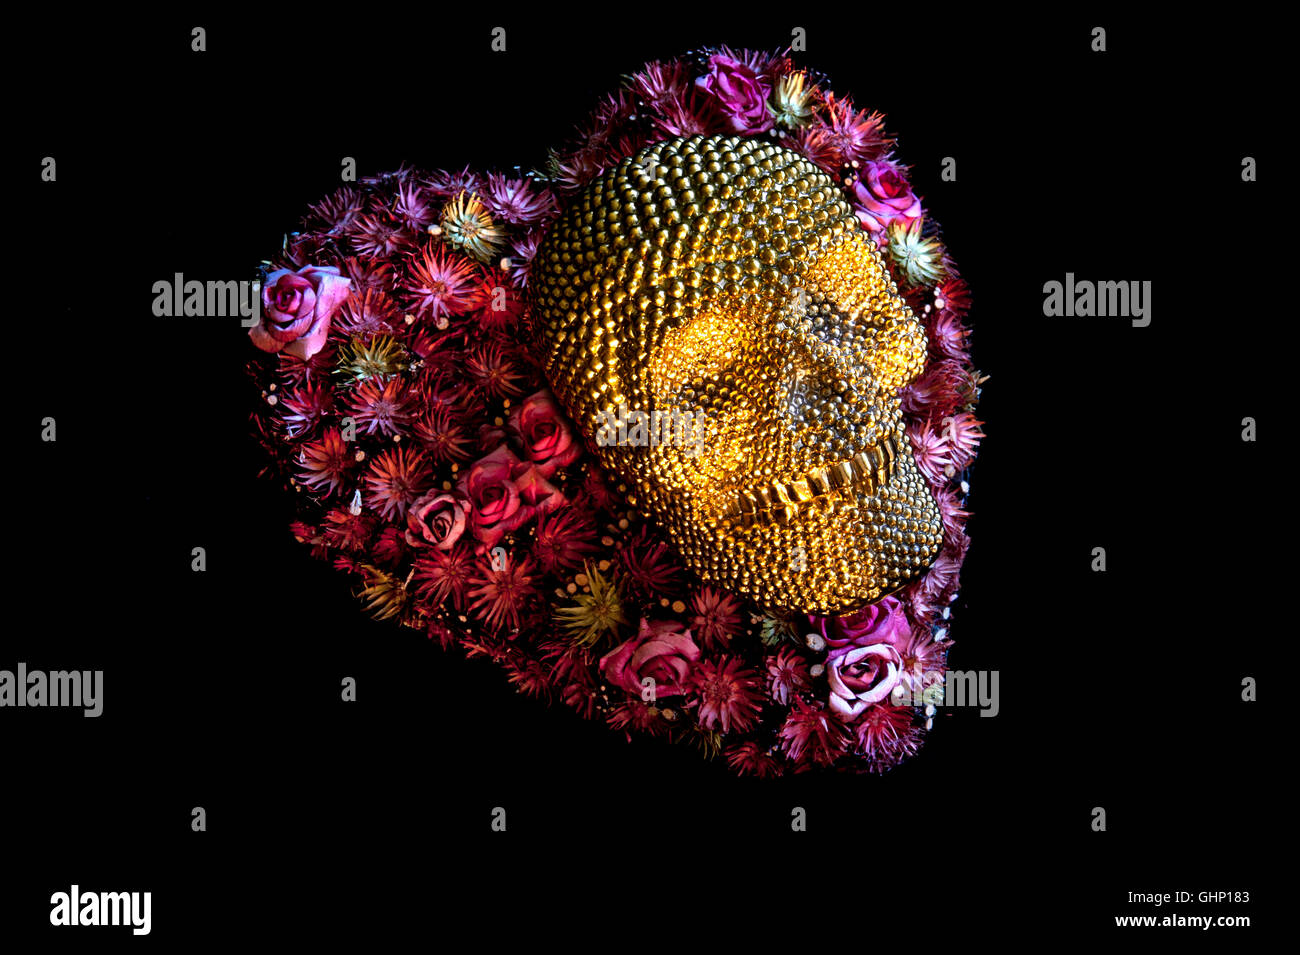 Concept image of smiling gold skull lying on heart shaped flower arrangement on black background Stock Photo